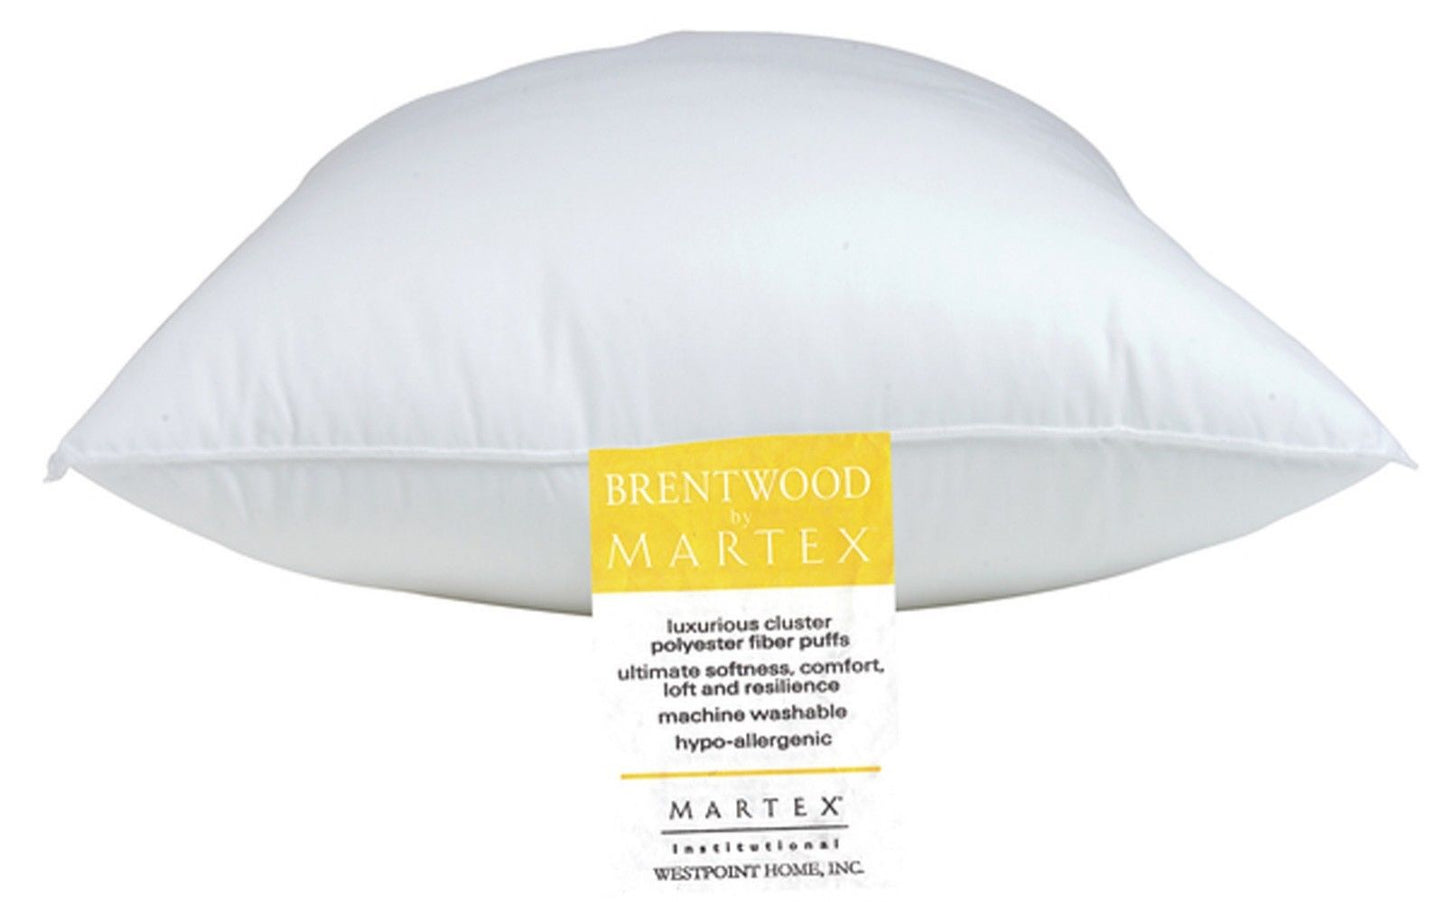 Martex Brentwood Gold Label Jumbo Hampton Inn Hotel Pillow